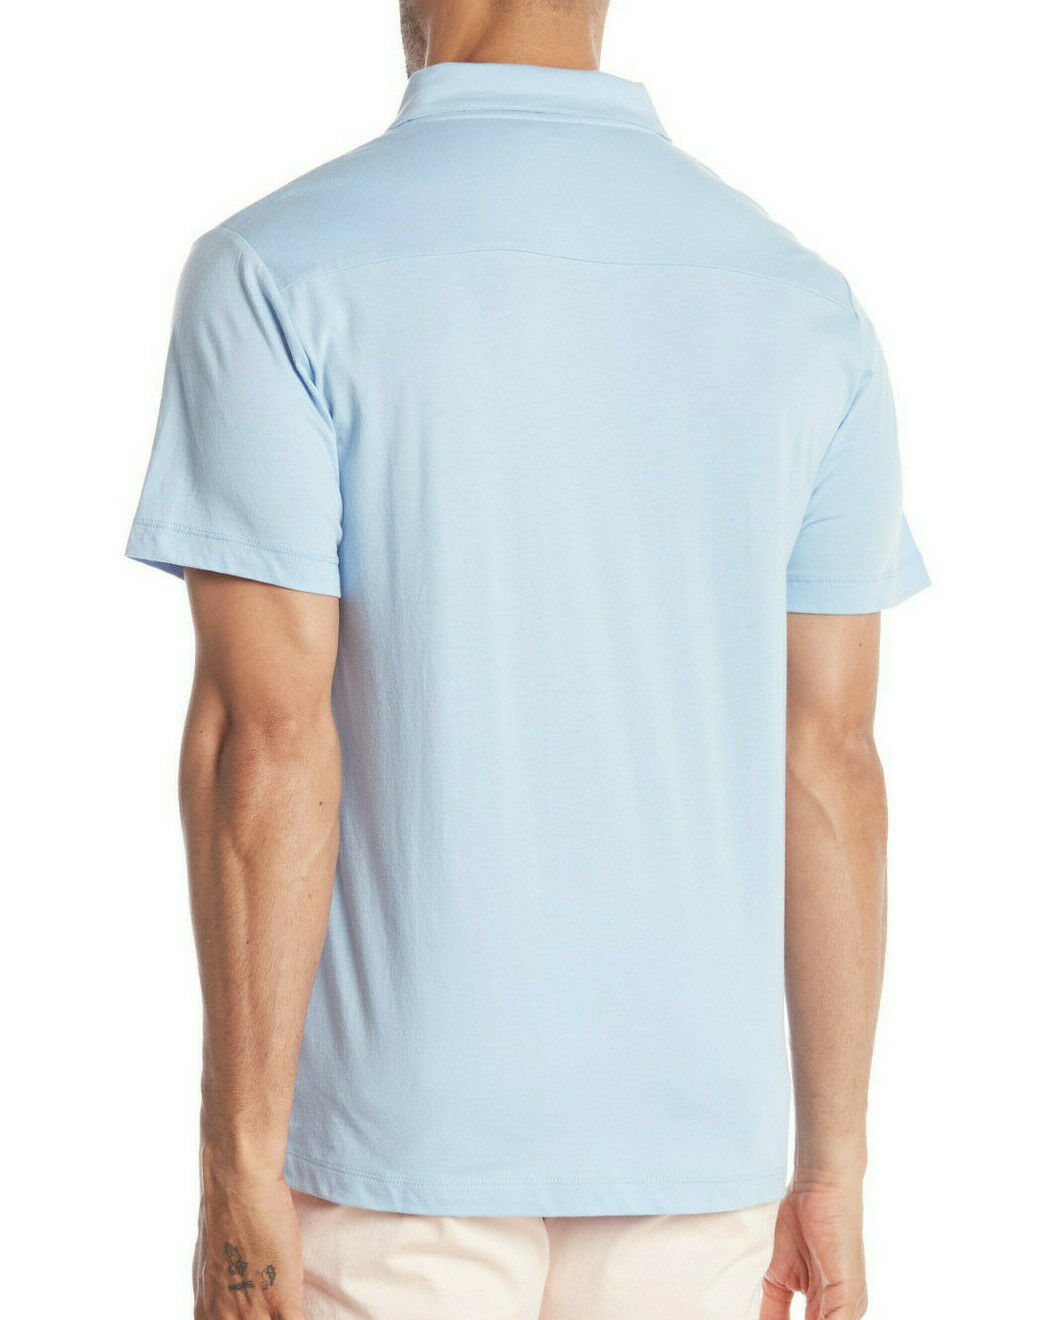 Onia Men's Eric Polo Pocket Shirt Powder Blue, Size S 193294046479 | eBay